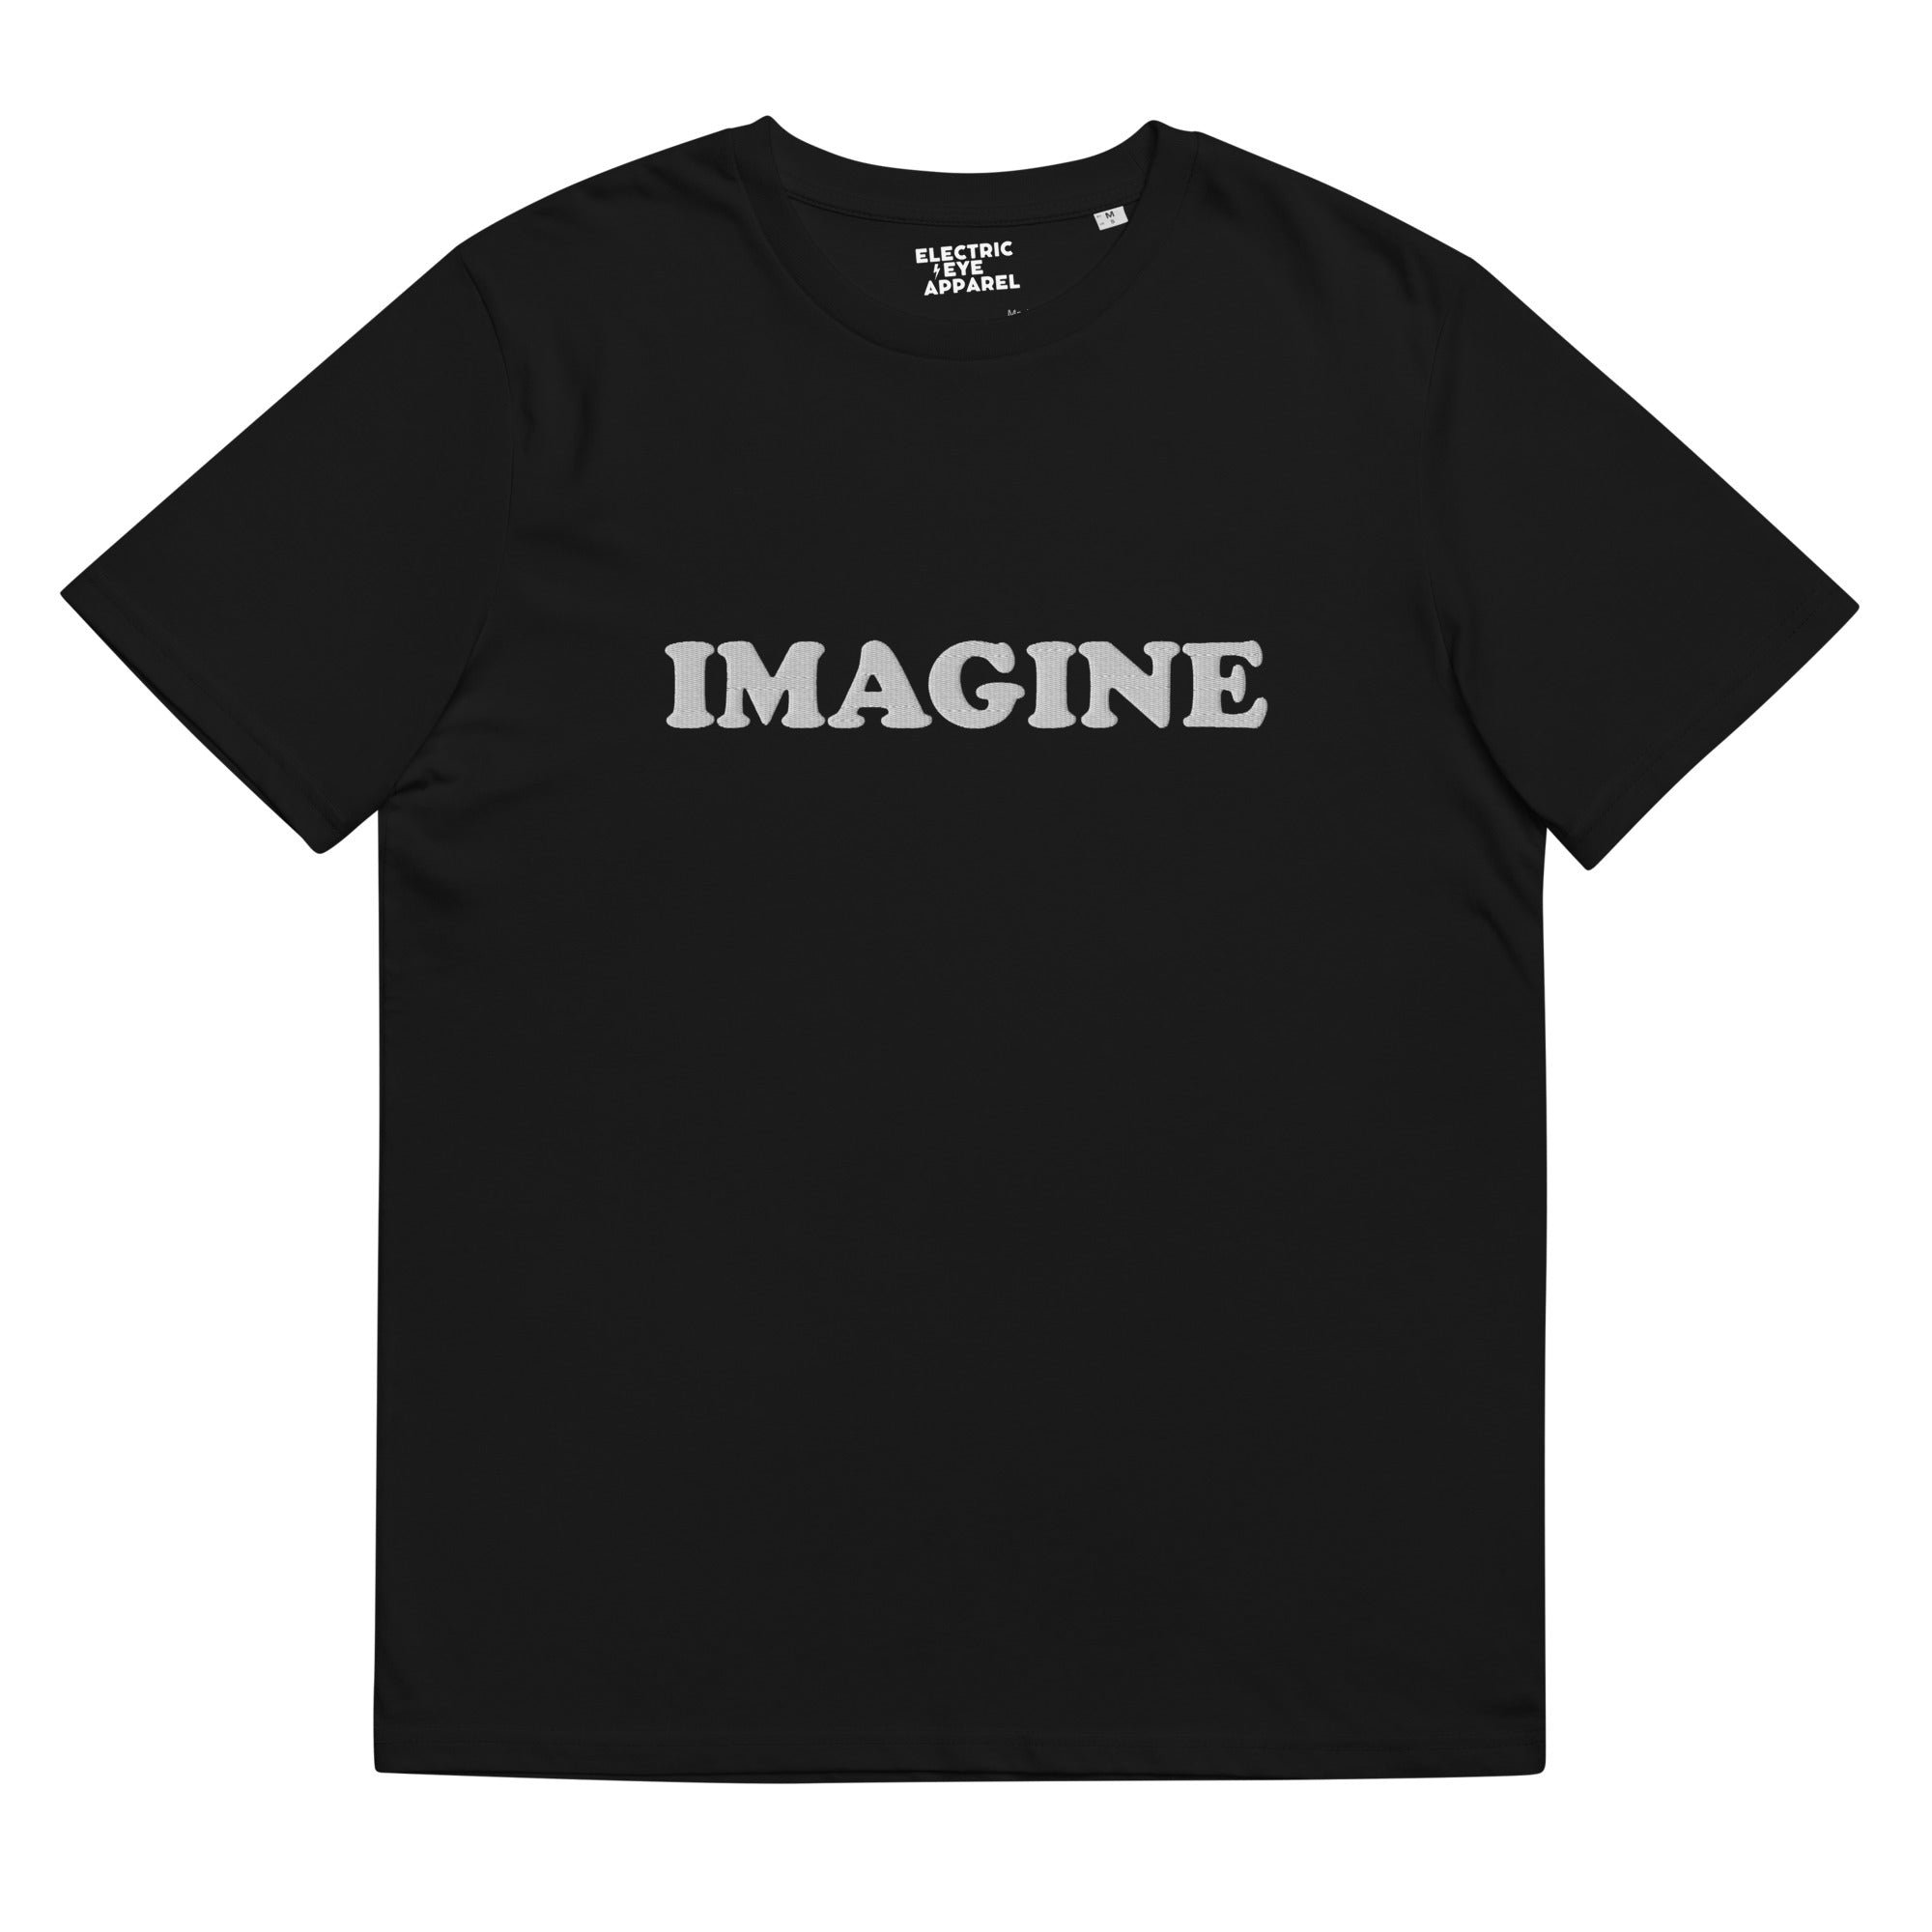 John Lennon Yoko Ono Inspired Premium 'IMAGINE' Embroidered Unisex organic cotton t-shirt